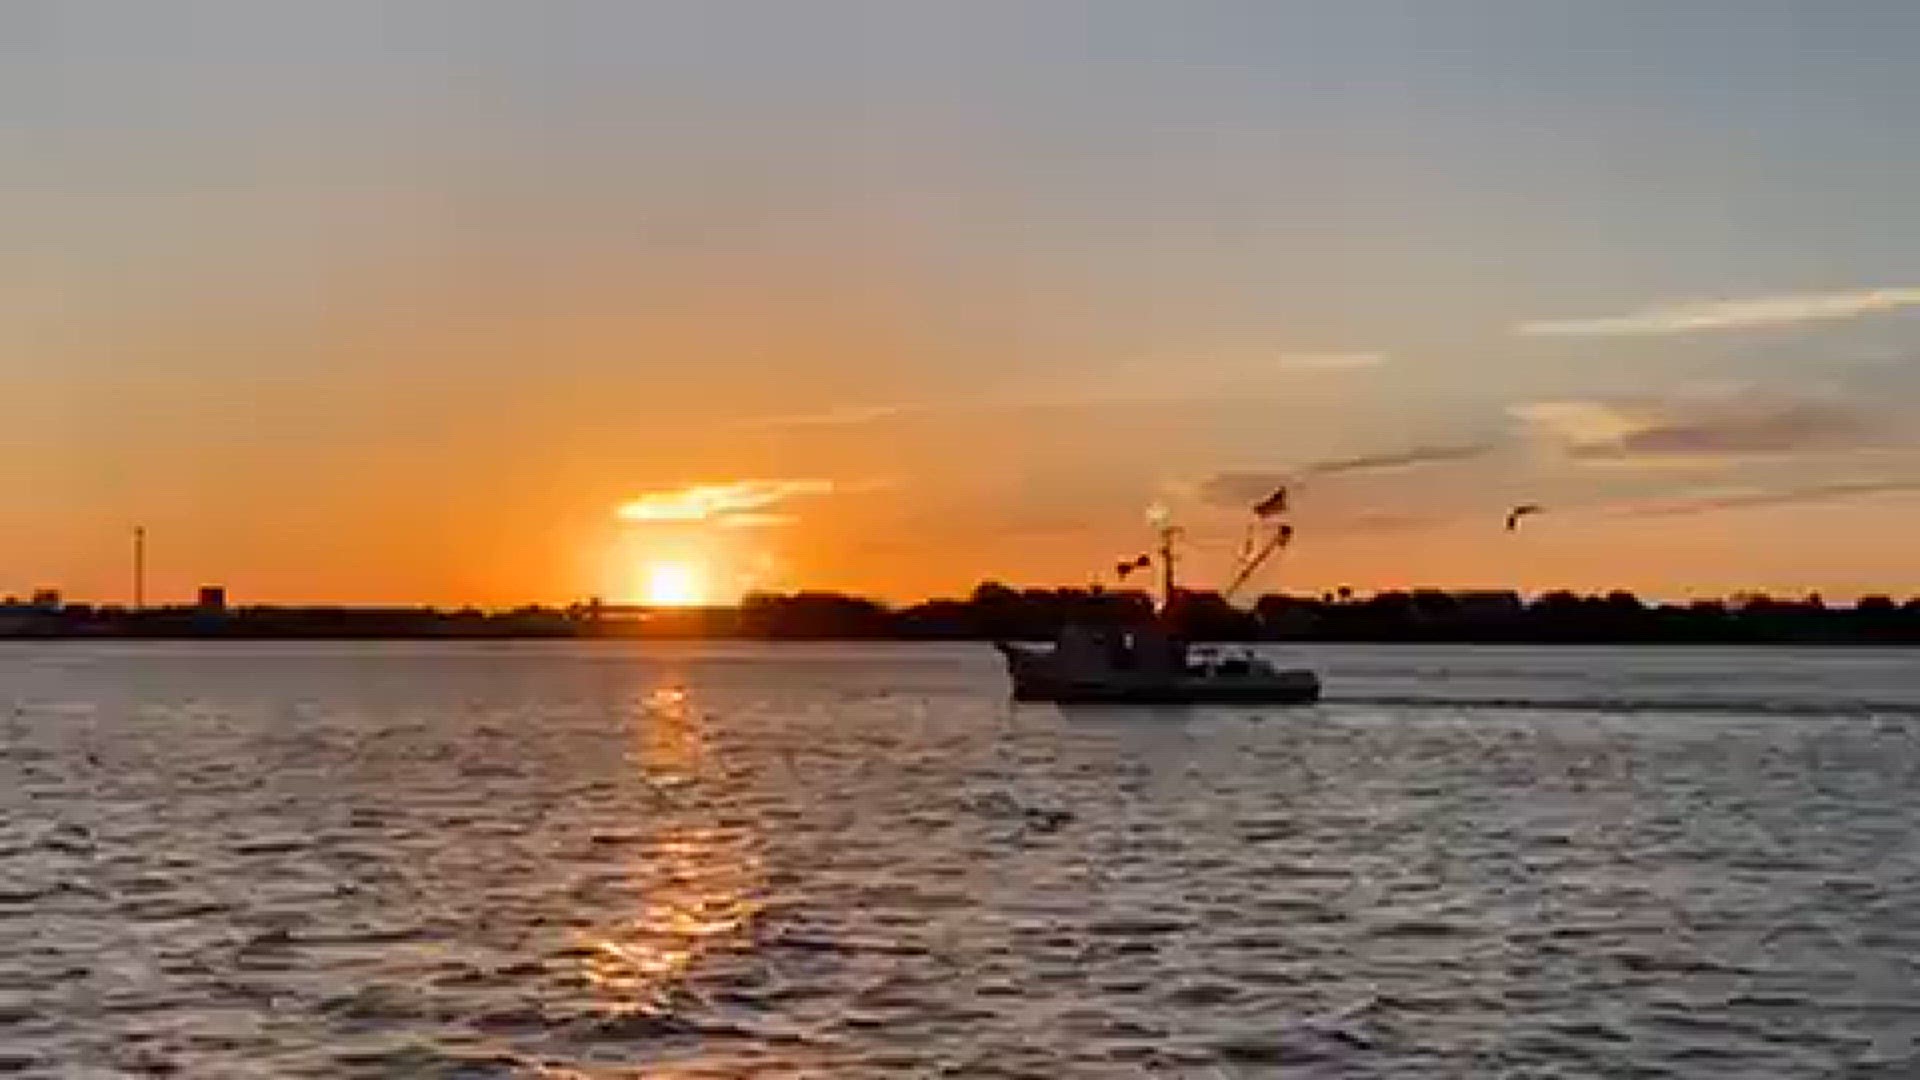 Rock Bottom shrimp boat i  Galveston Bay. Want some shrimp Len Cannon?
Credit: Texas Shrimp Diva